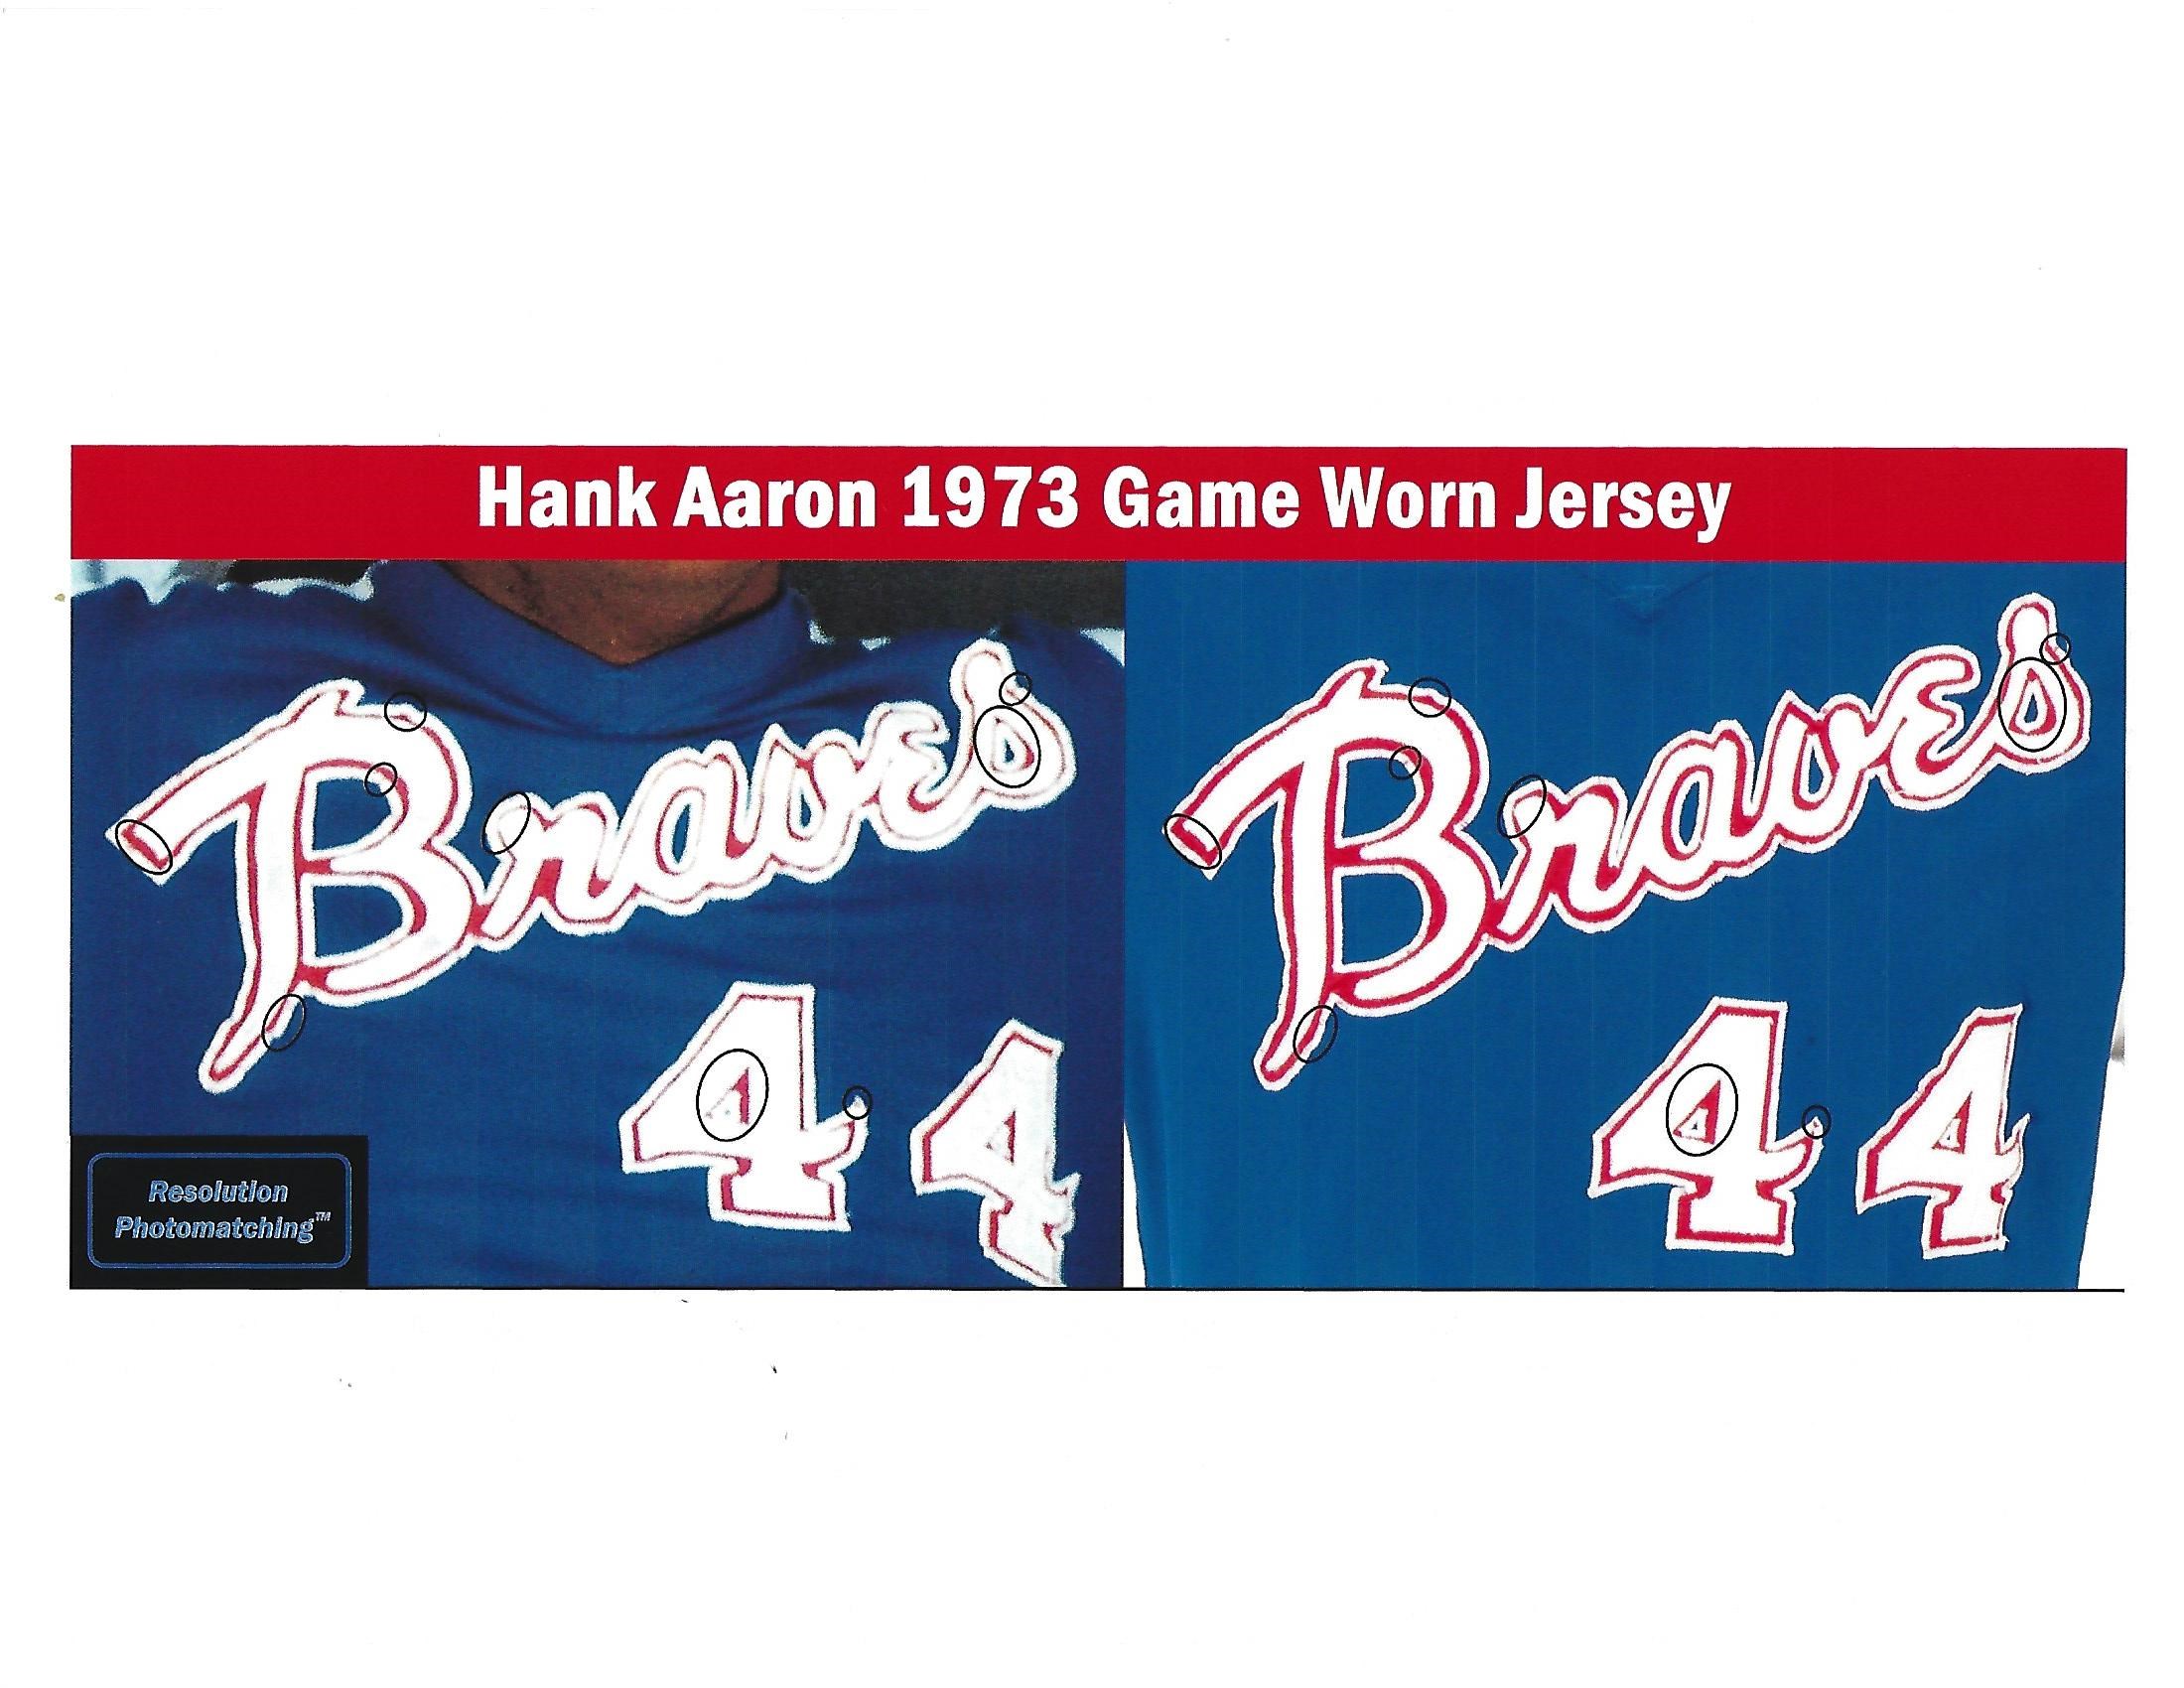 Hank Aaron Atlanta Braves, an art print by ArtStudio 93 - INPRNT